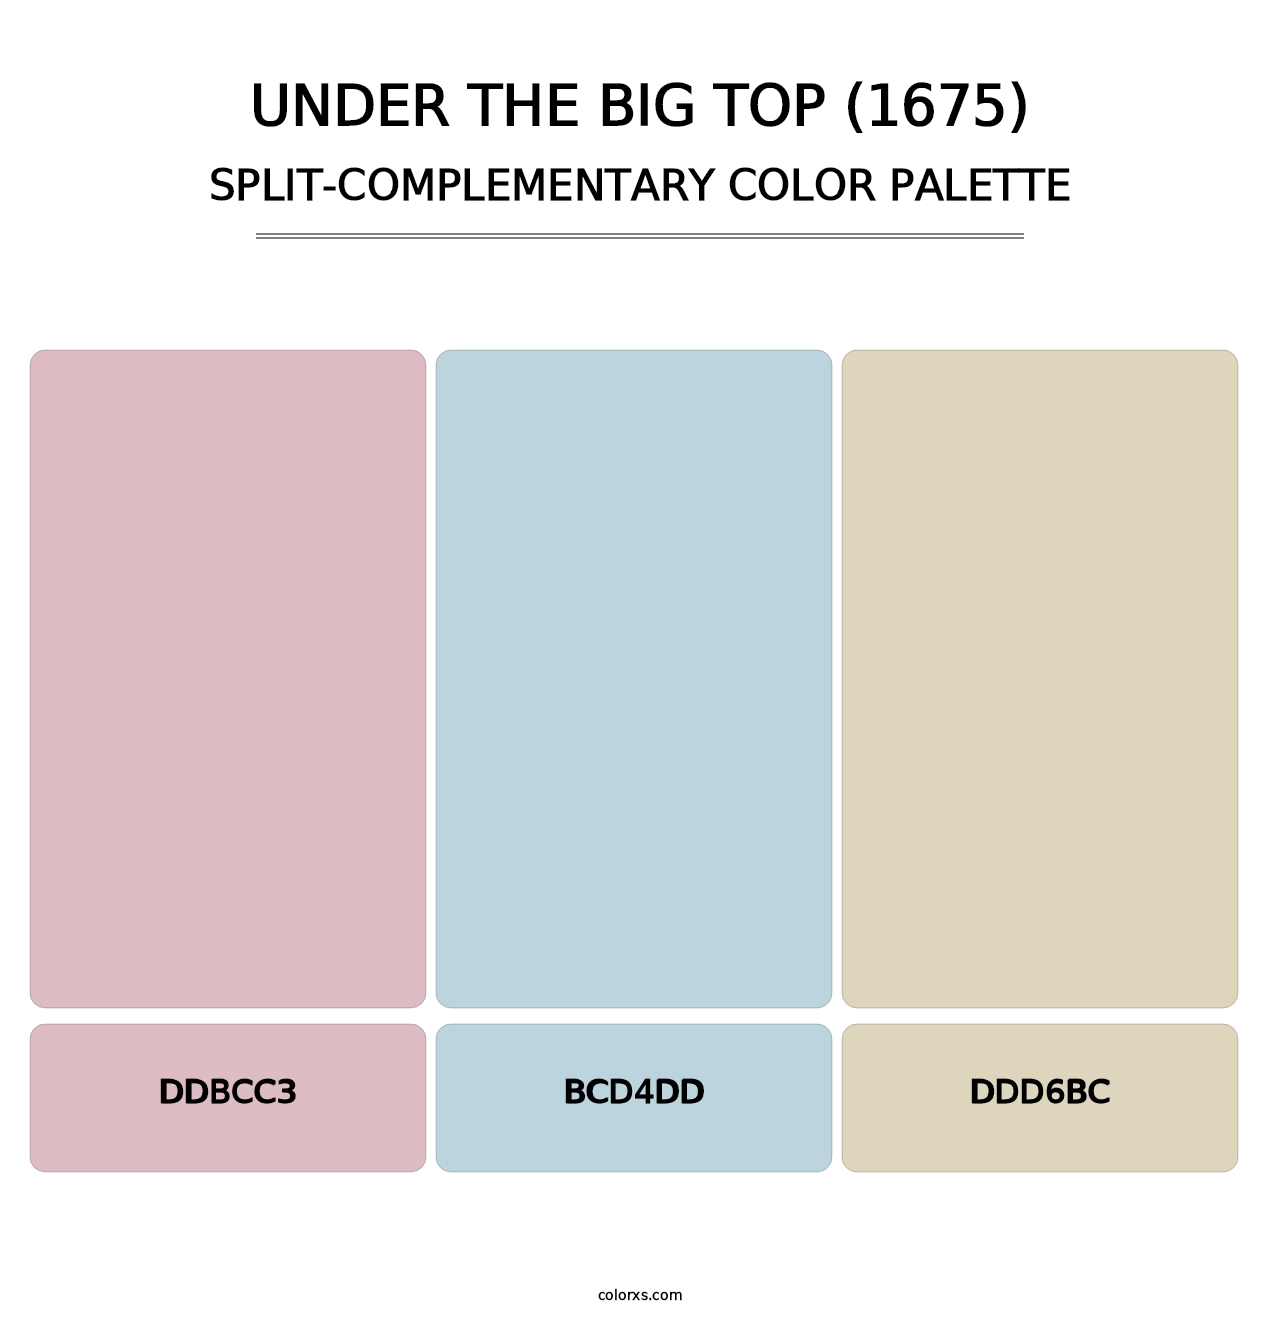 Under the Big Top (1675) - Split-Complementary Color Palette